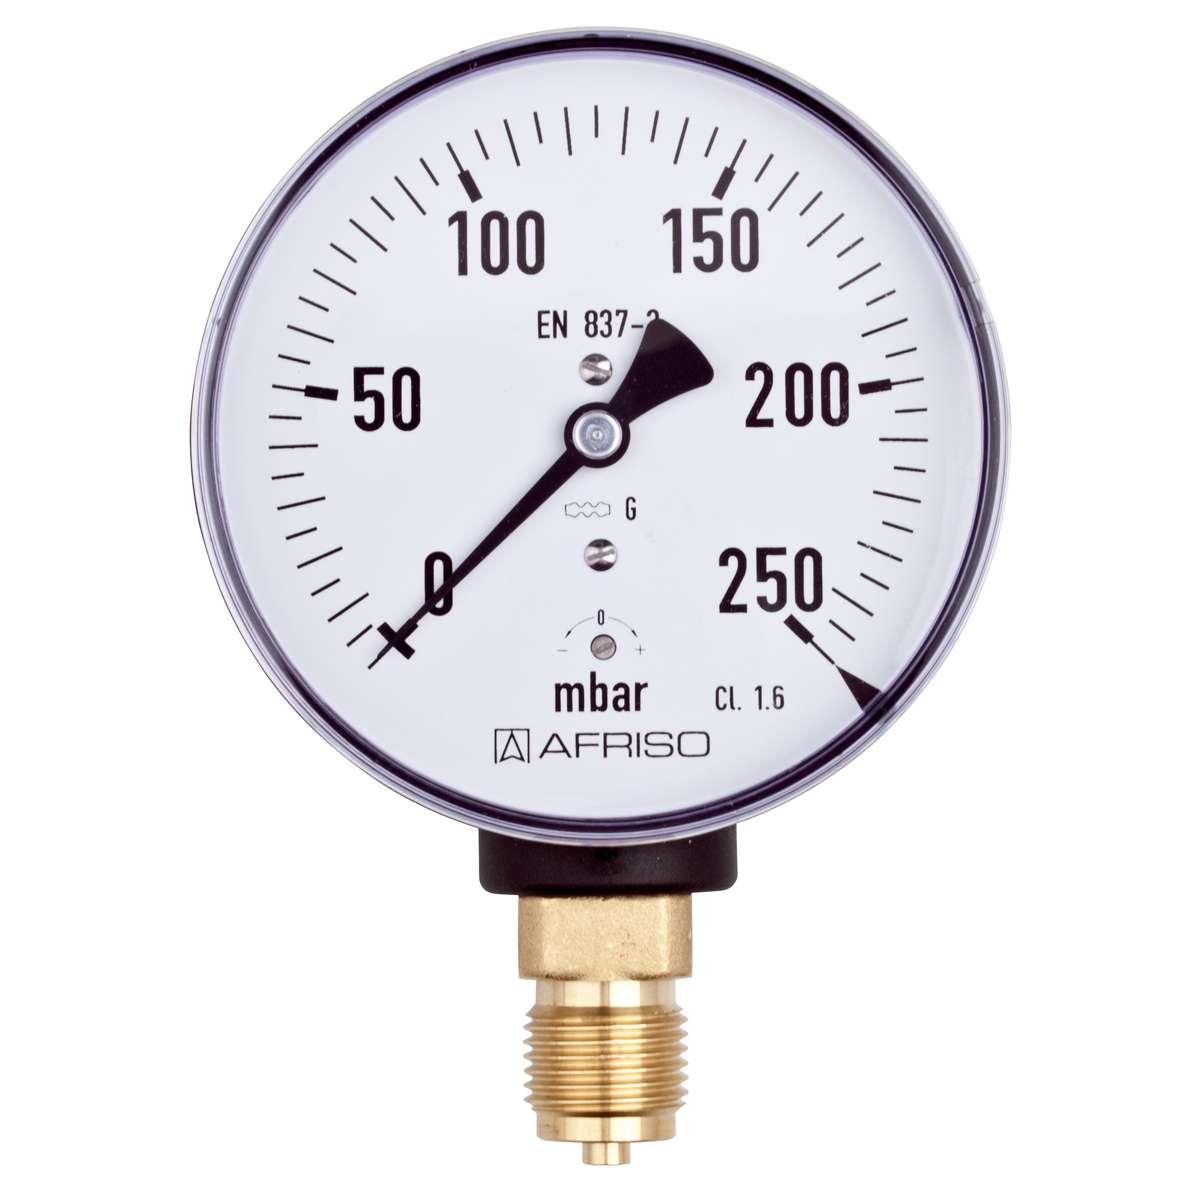 Manometr KP 100 pro plynná média, Ø 100 mm, 0 ÷ 600 mbar, G½", radiální, typ D2 - AFRISO.CZ